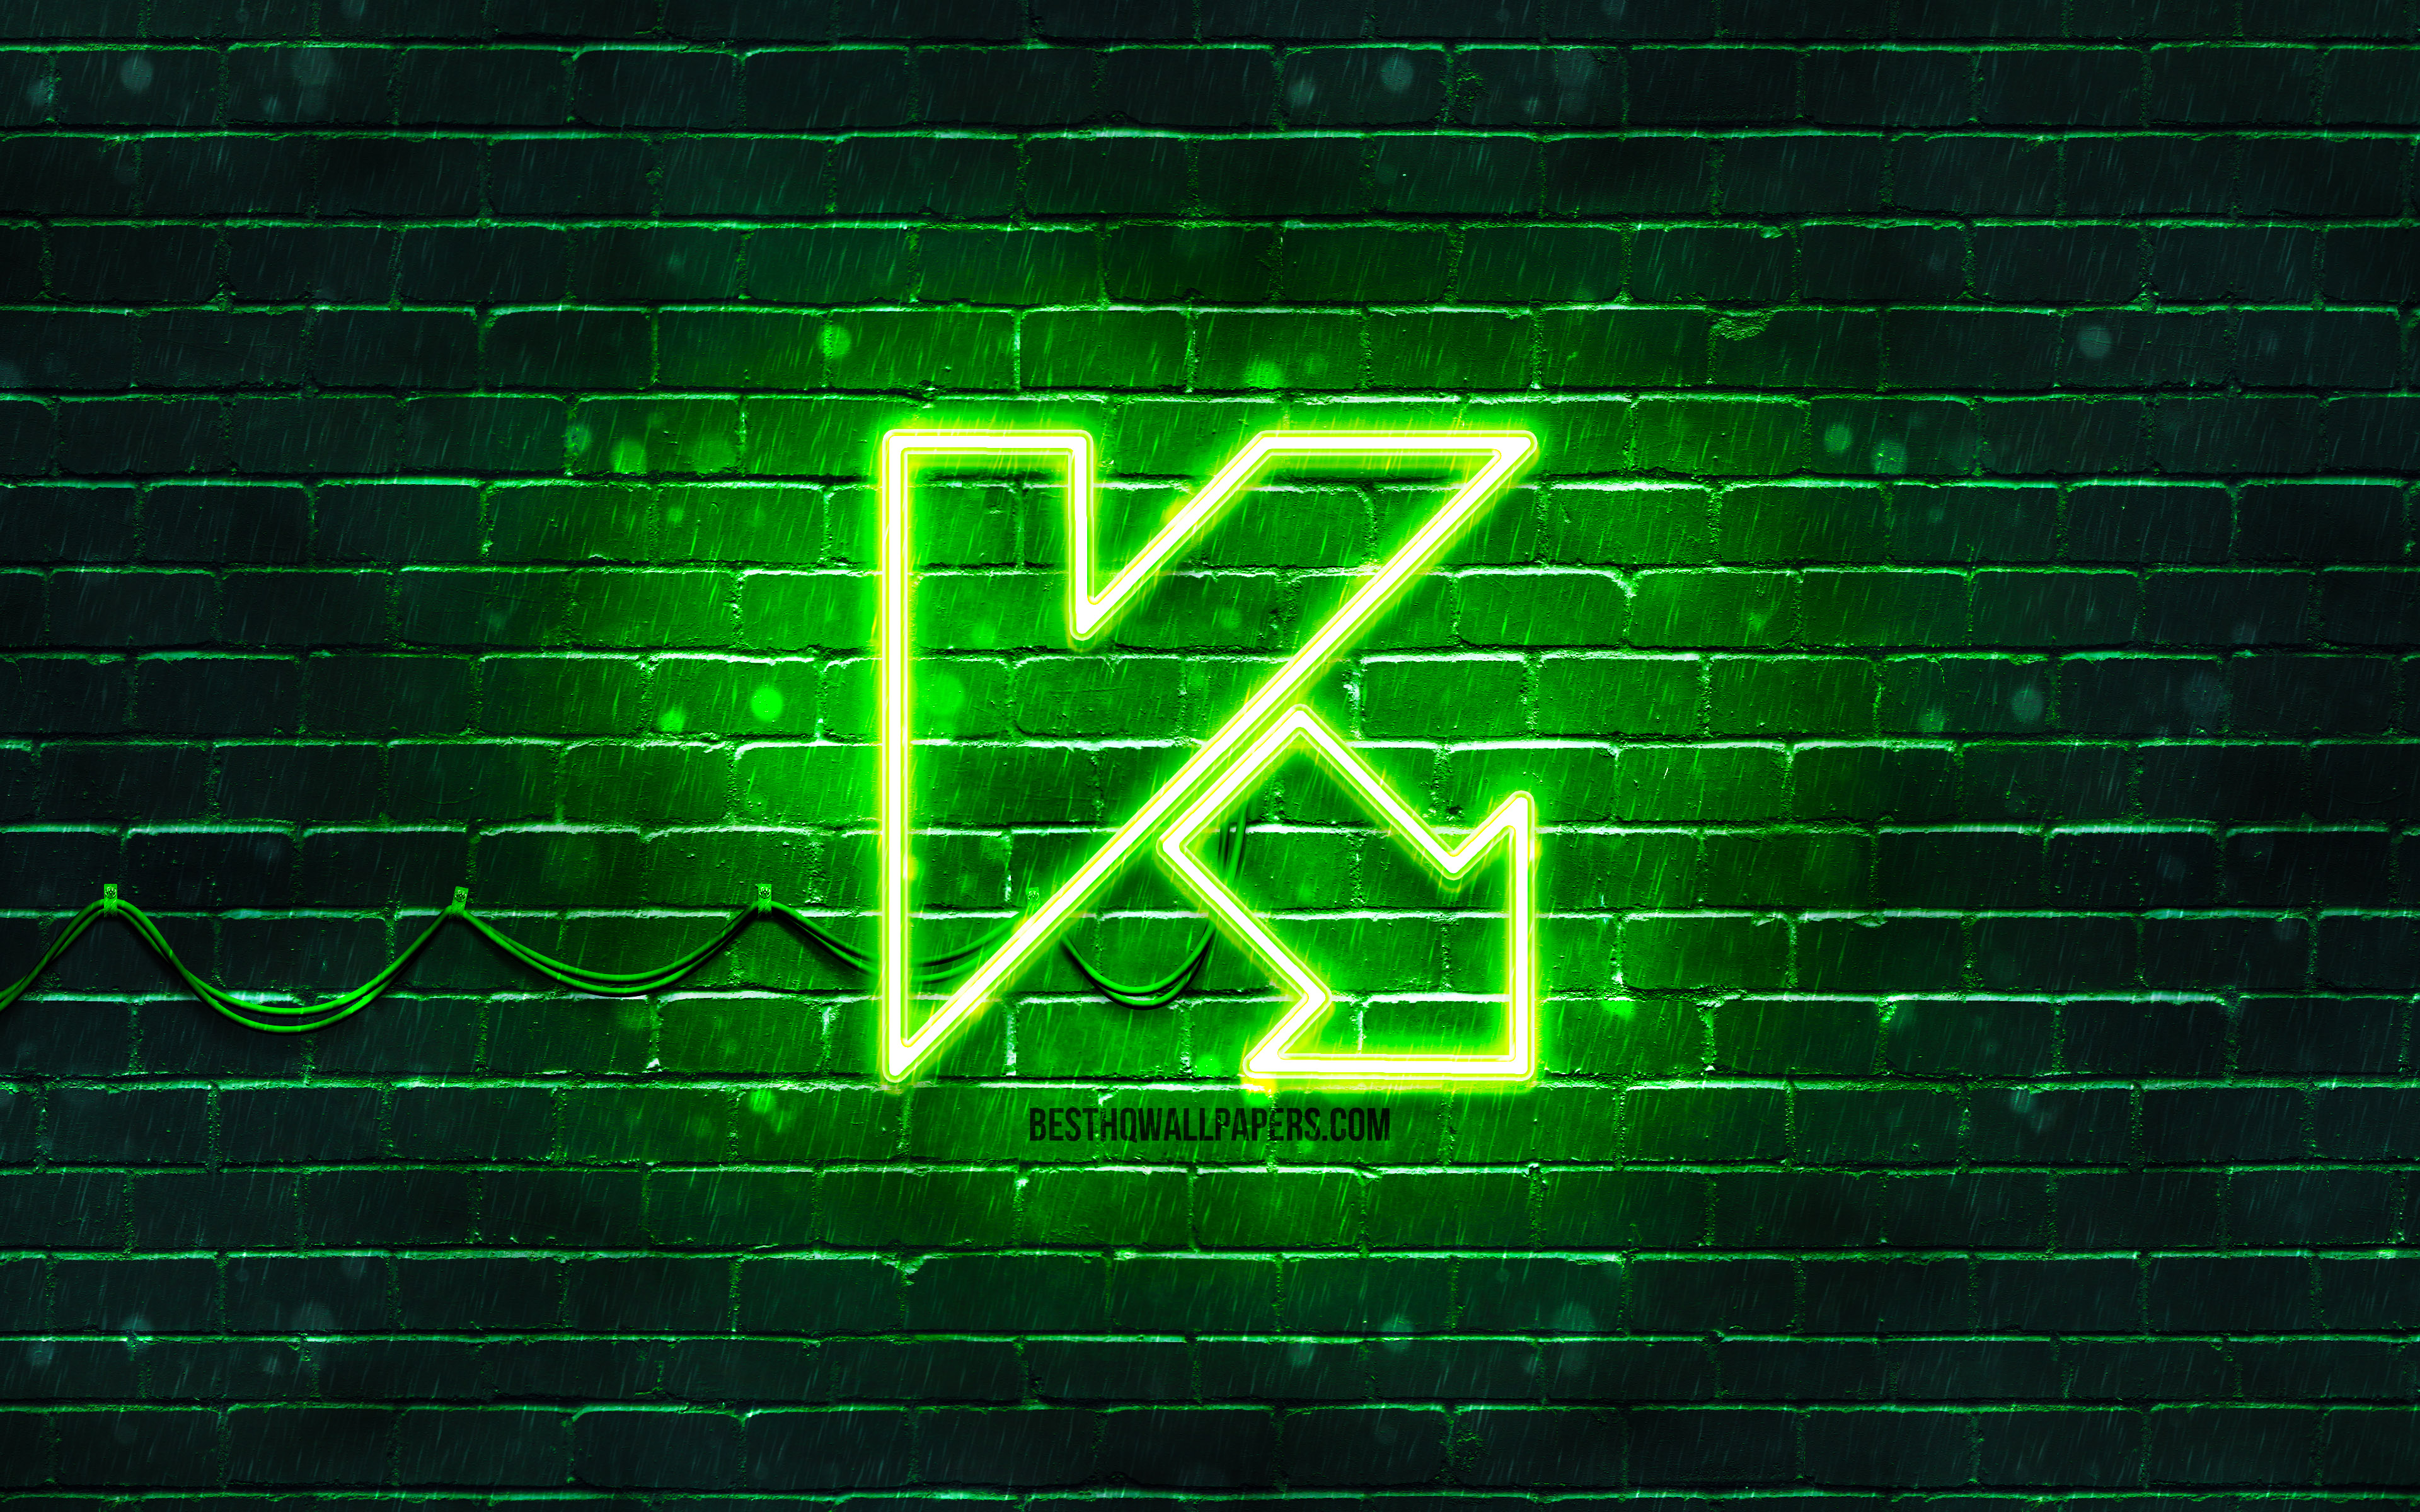 Download wallpaper Kaspersky green logo, 4k, green brickwall, Kaspersky logo, antivirus software, Kaspersky neon logo, Kaspersky for desktop with resolution 3840x2400. High Quality HD picture wallpaper